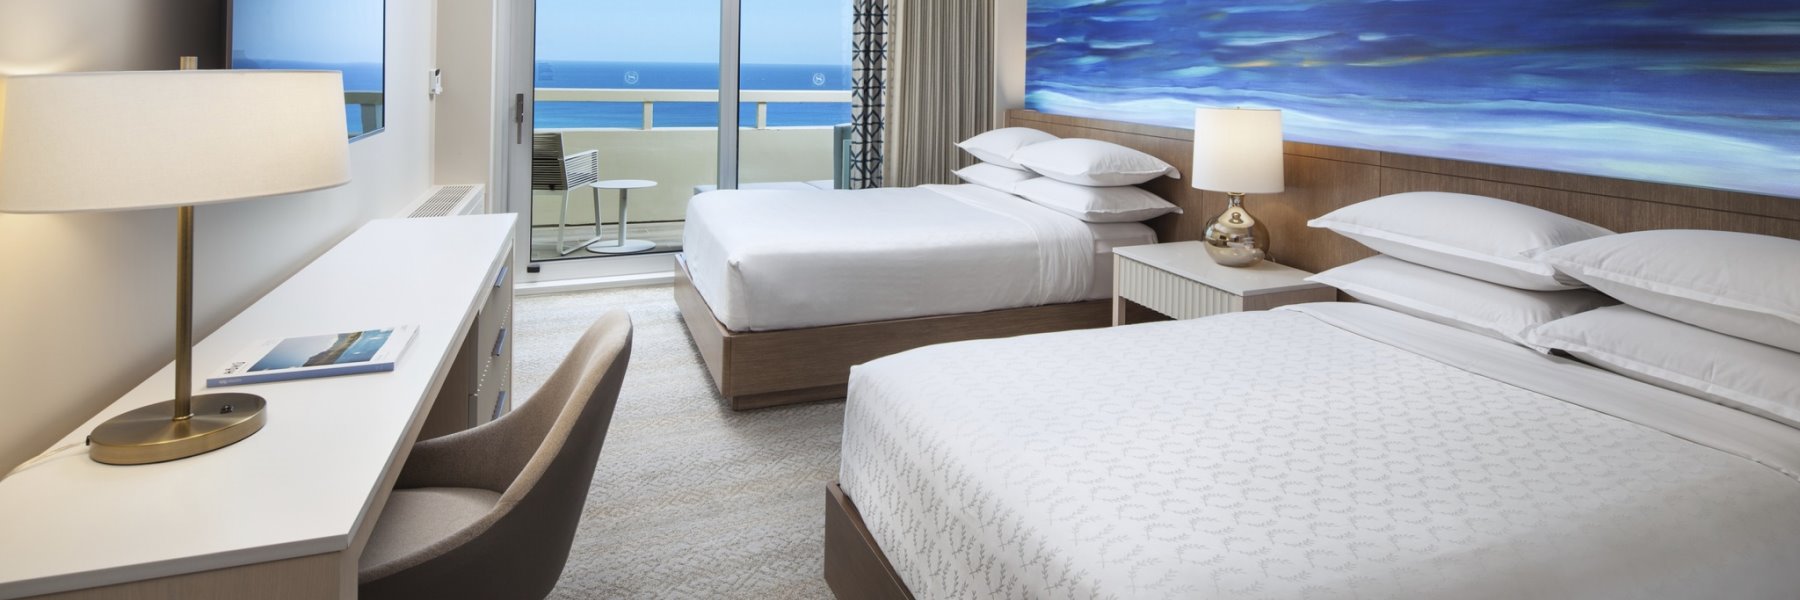 Rooms special offers at sheraton waikiki beach resort